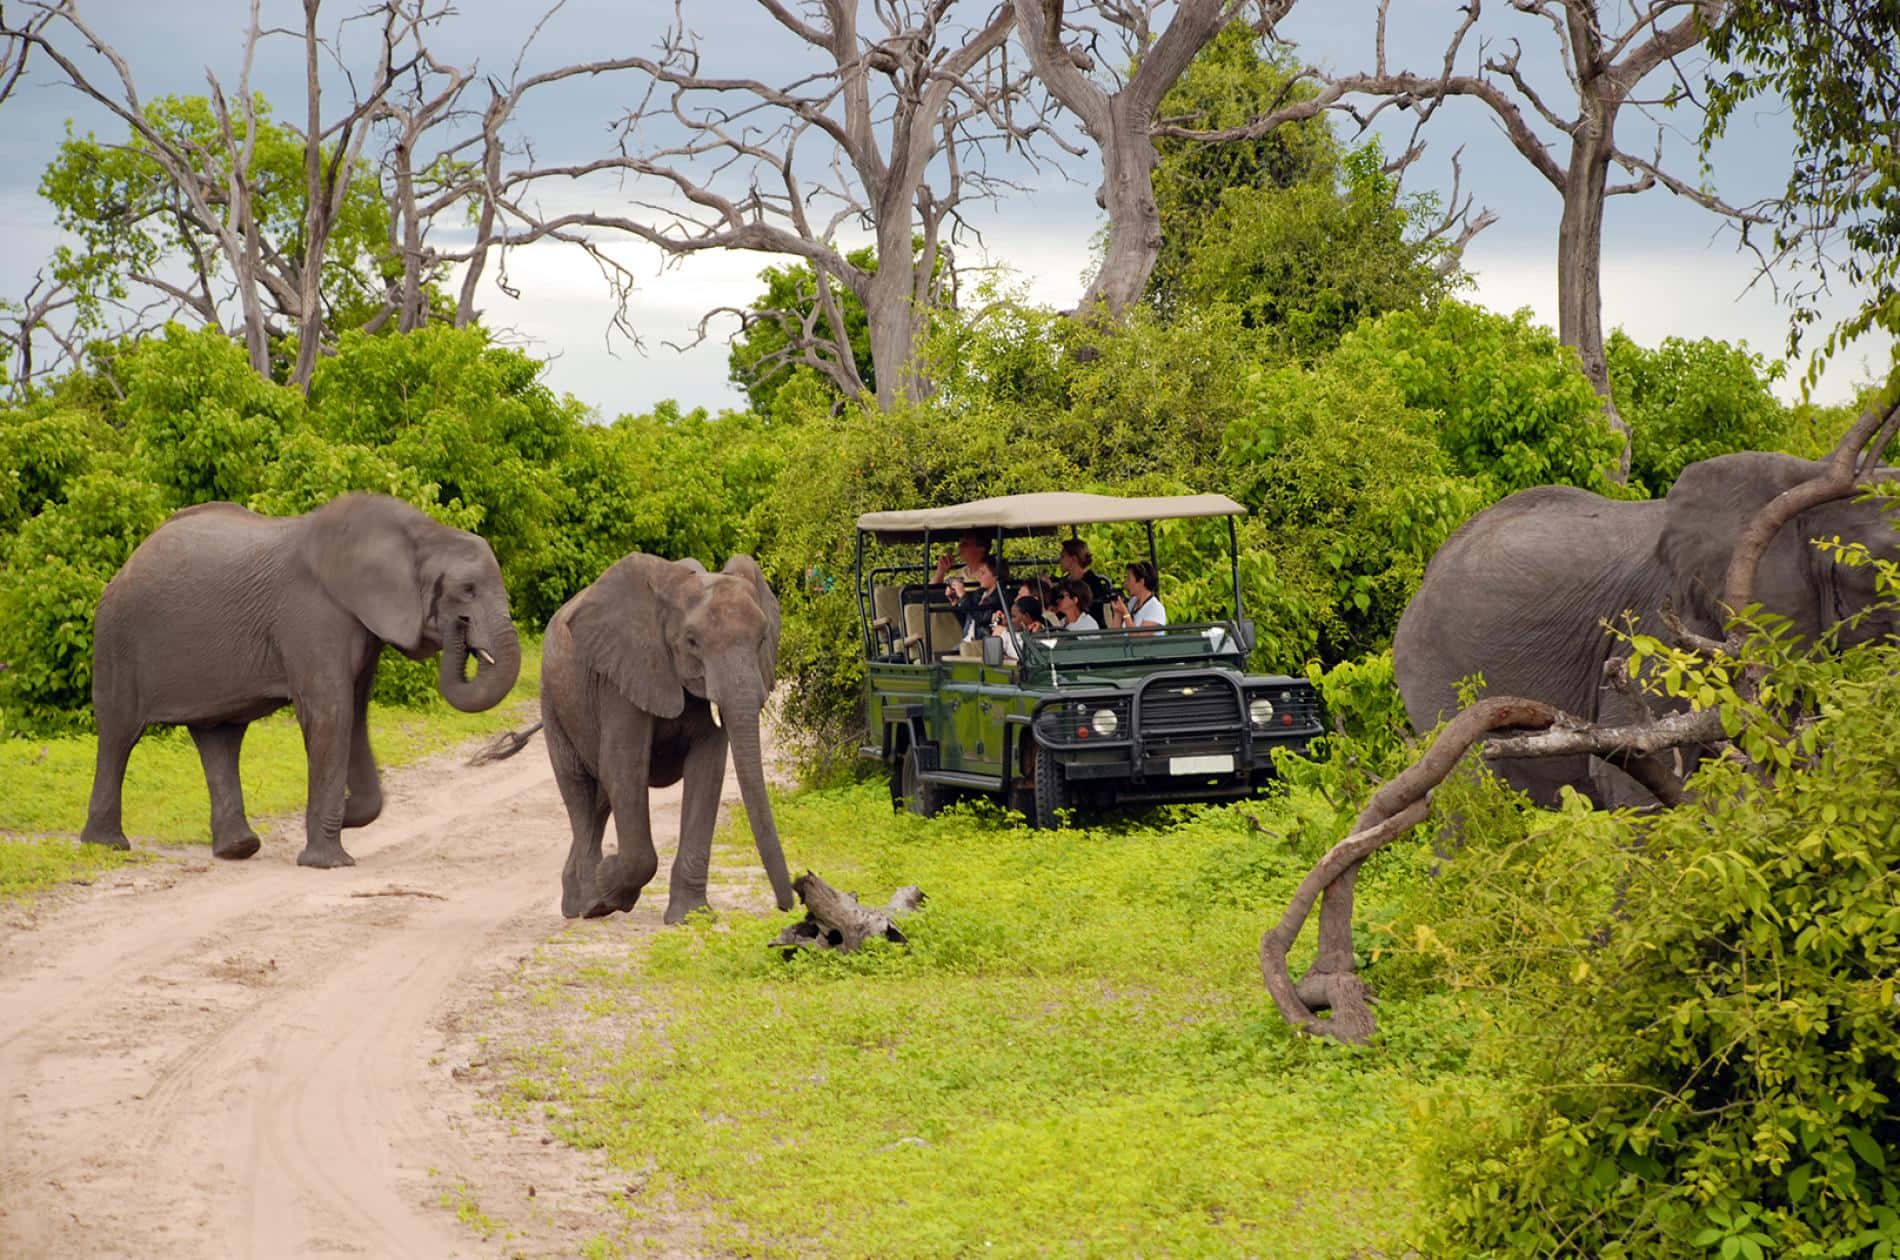 Imagende Elefantes De Safari En La Vida Salvaje Africana.